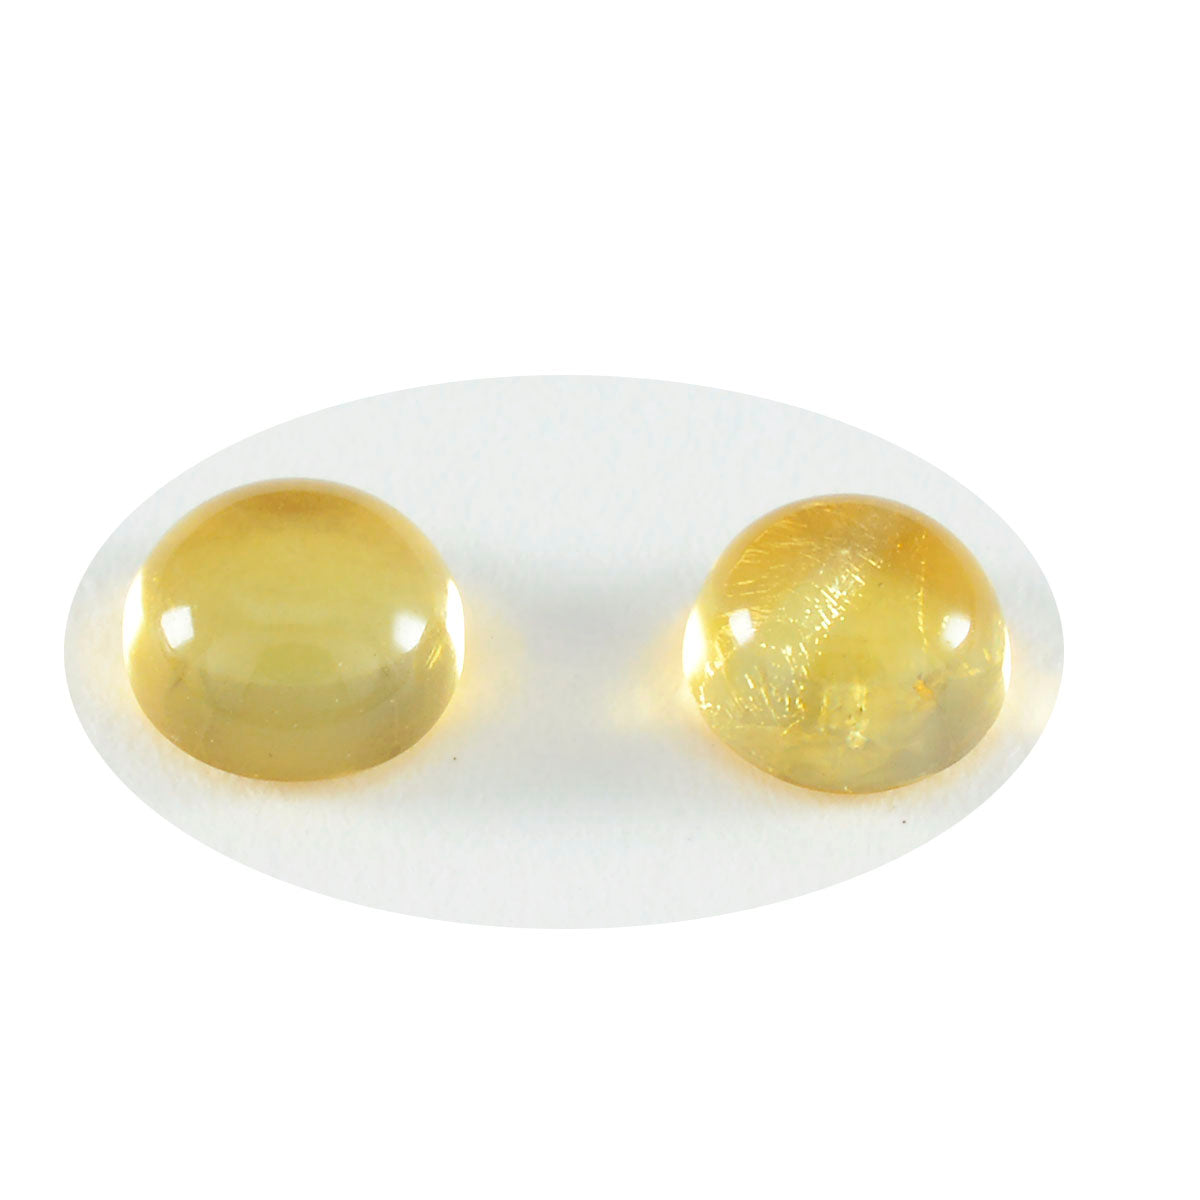 riyogems 1шт желтый цитрин кабошон 15х15 мм круглая форма качественный драгоценный камень